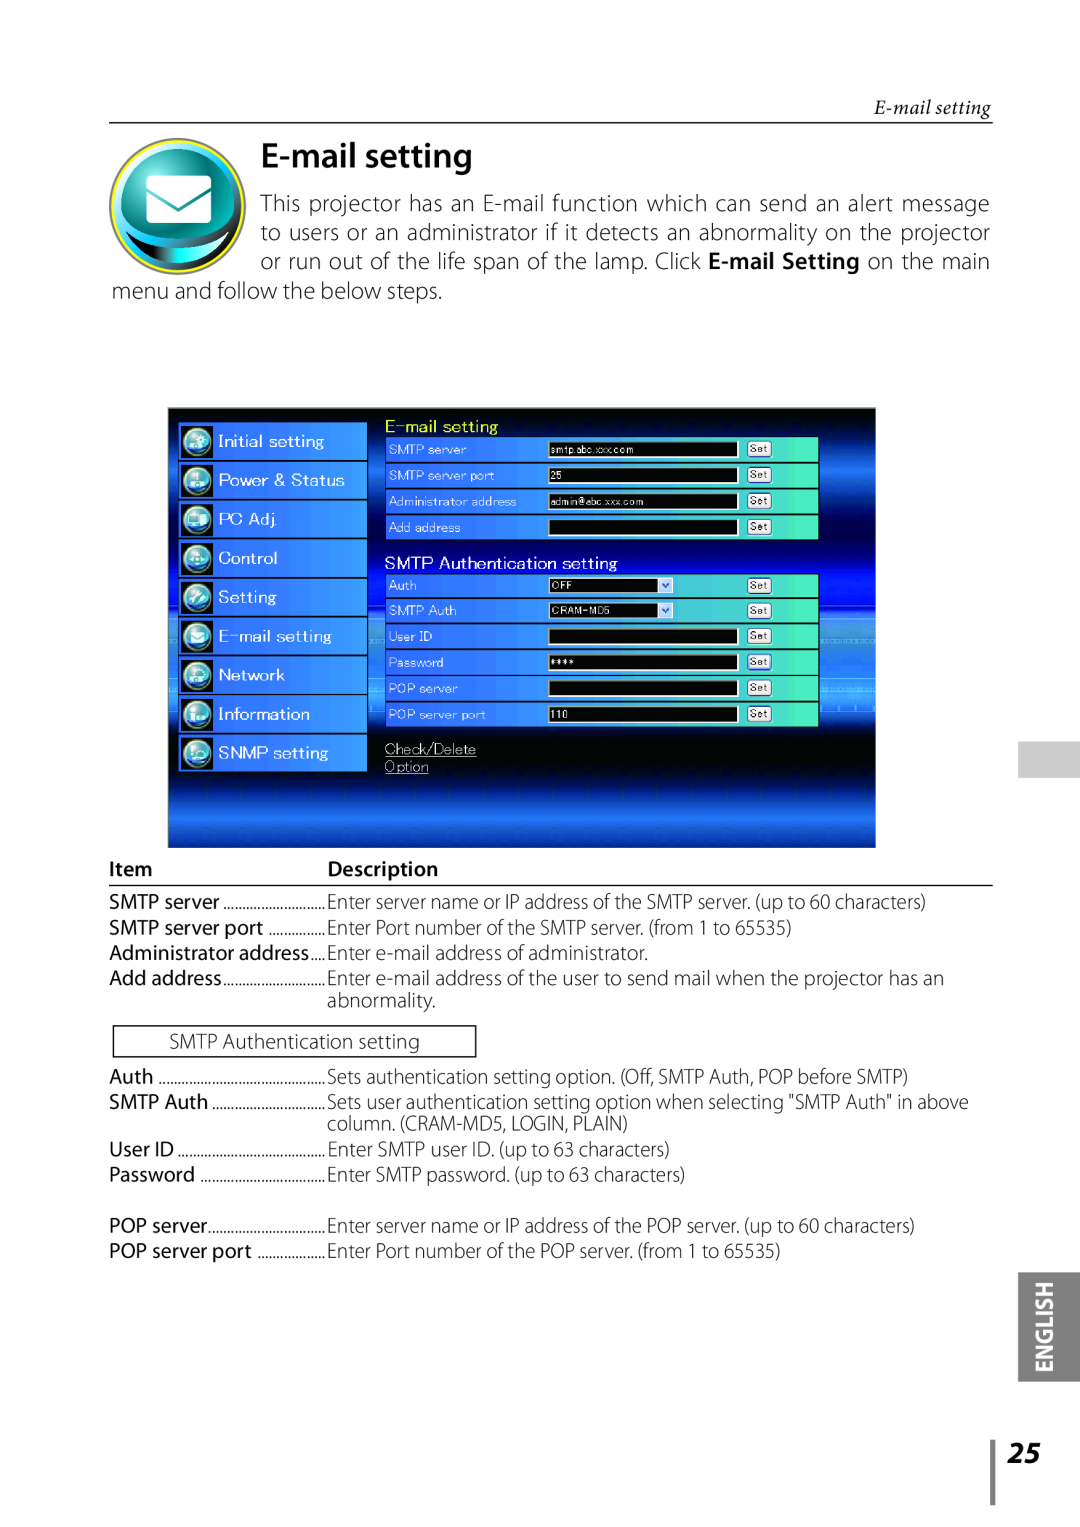 Sanyo Proj05 owner manual E-mail setting, menu and follow the below steps, English, Description 